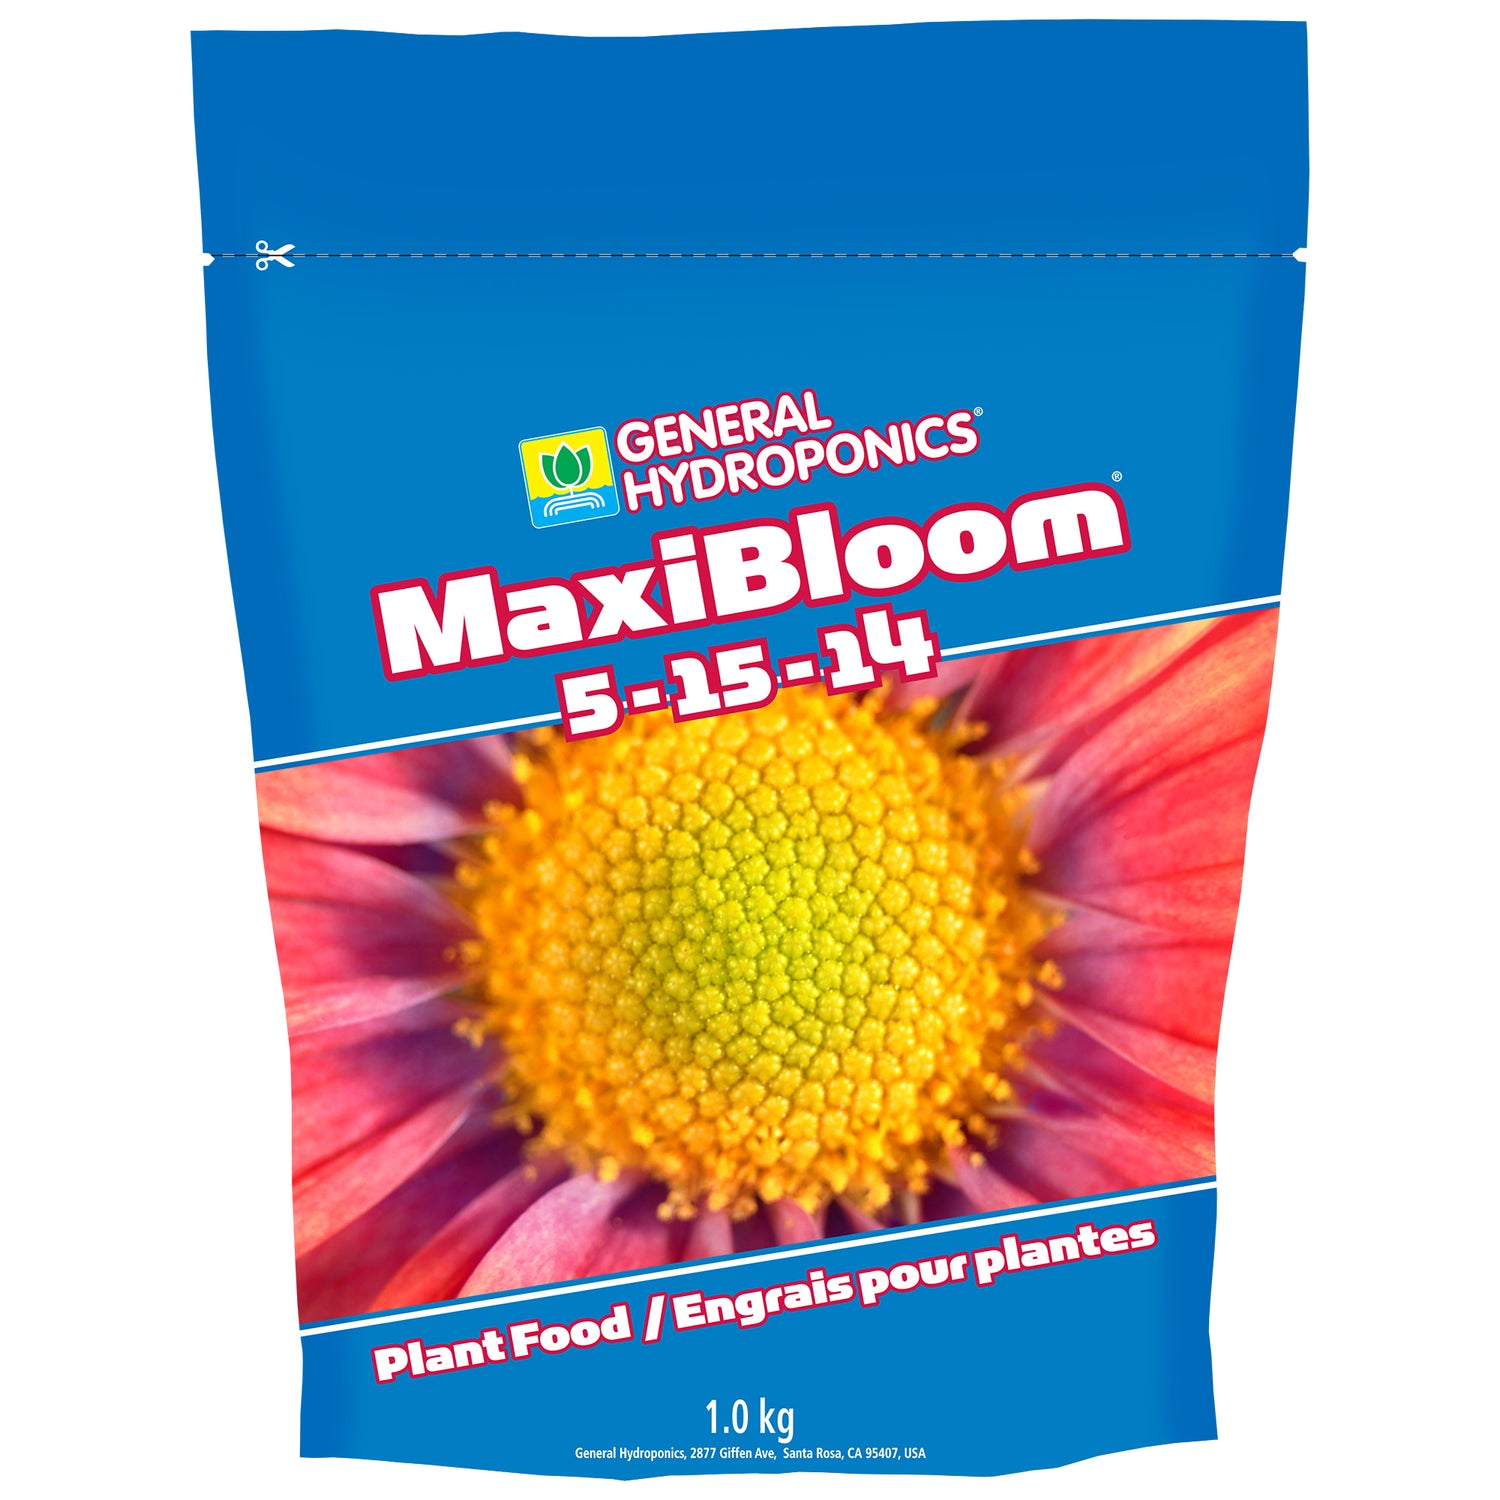 General Hydroponics® MaxiBloom™ 5 - 15 - 14 (P)